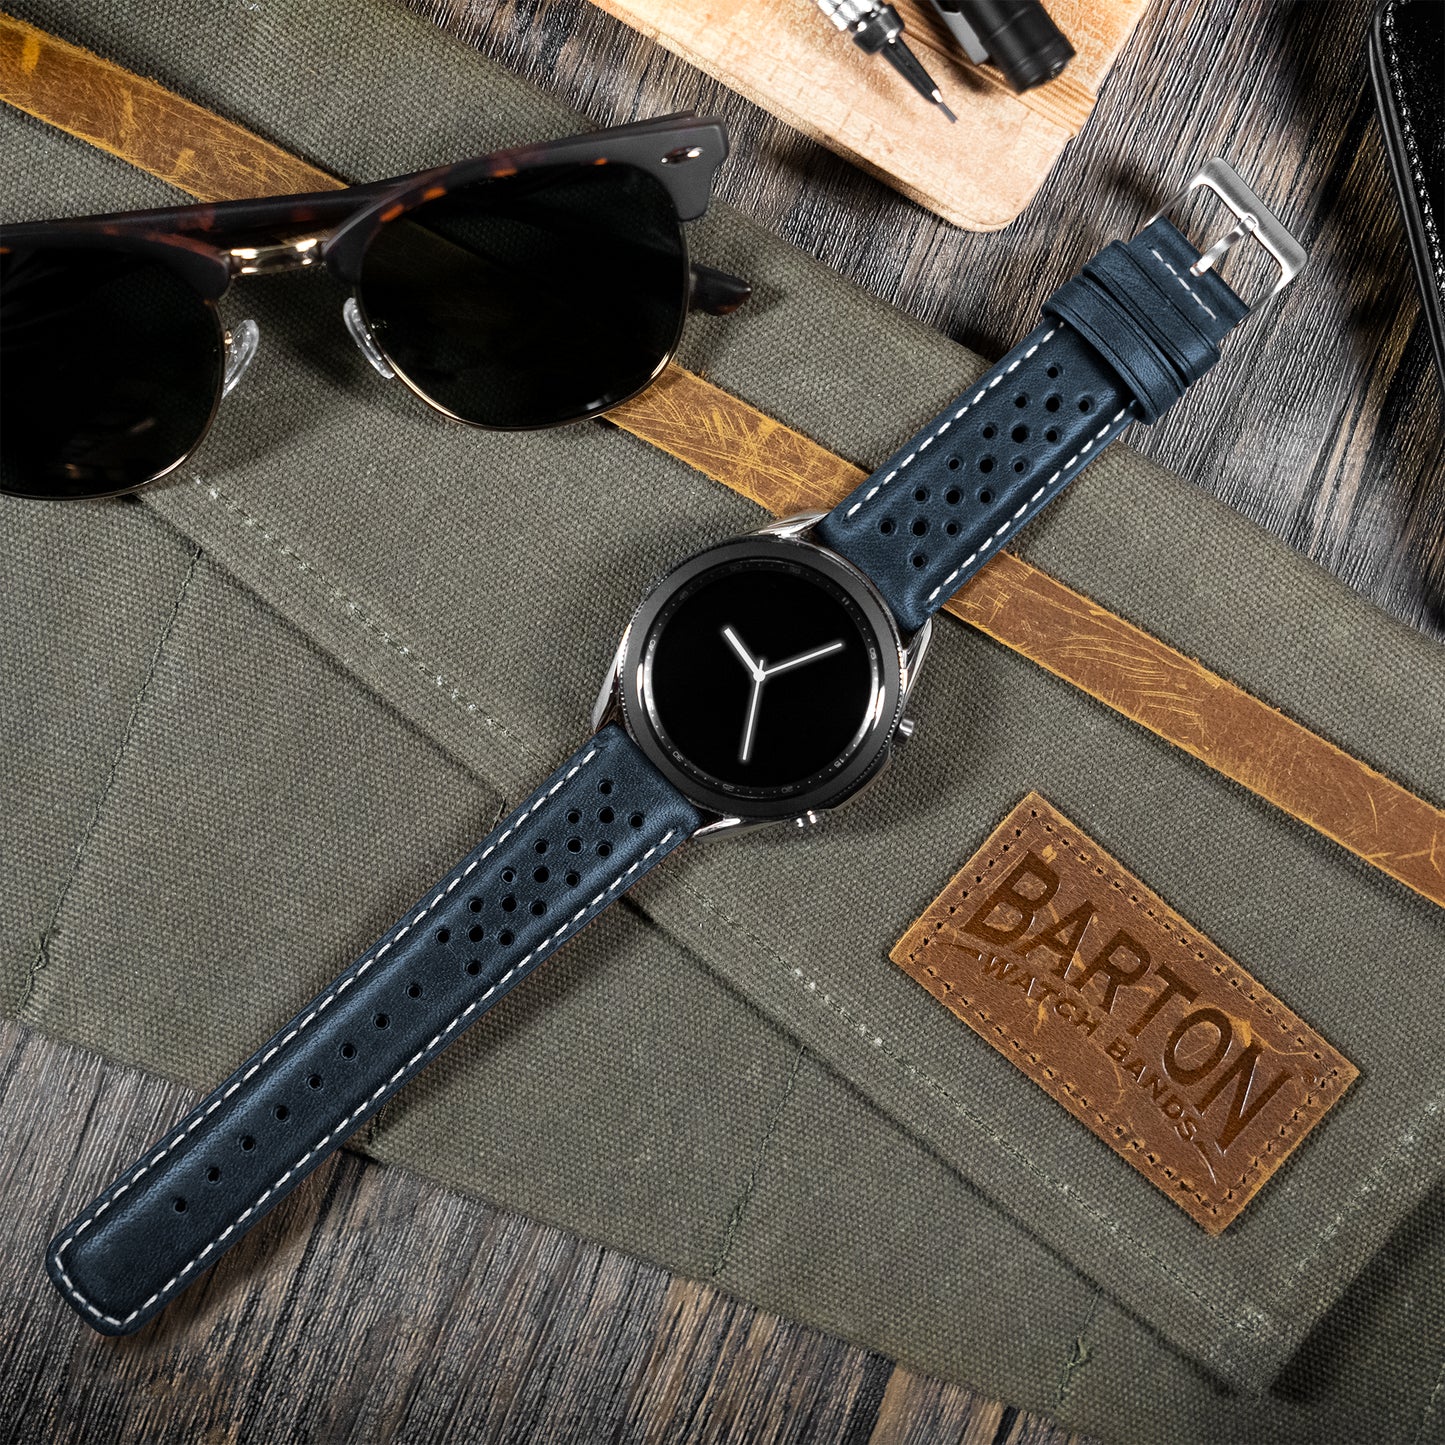 Samsung Galaxy Watch Racing Horween Leather Navy Blue Linen Stitch Watch Band